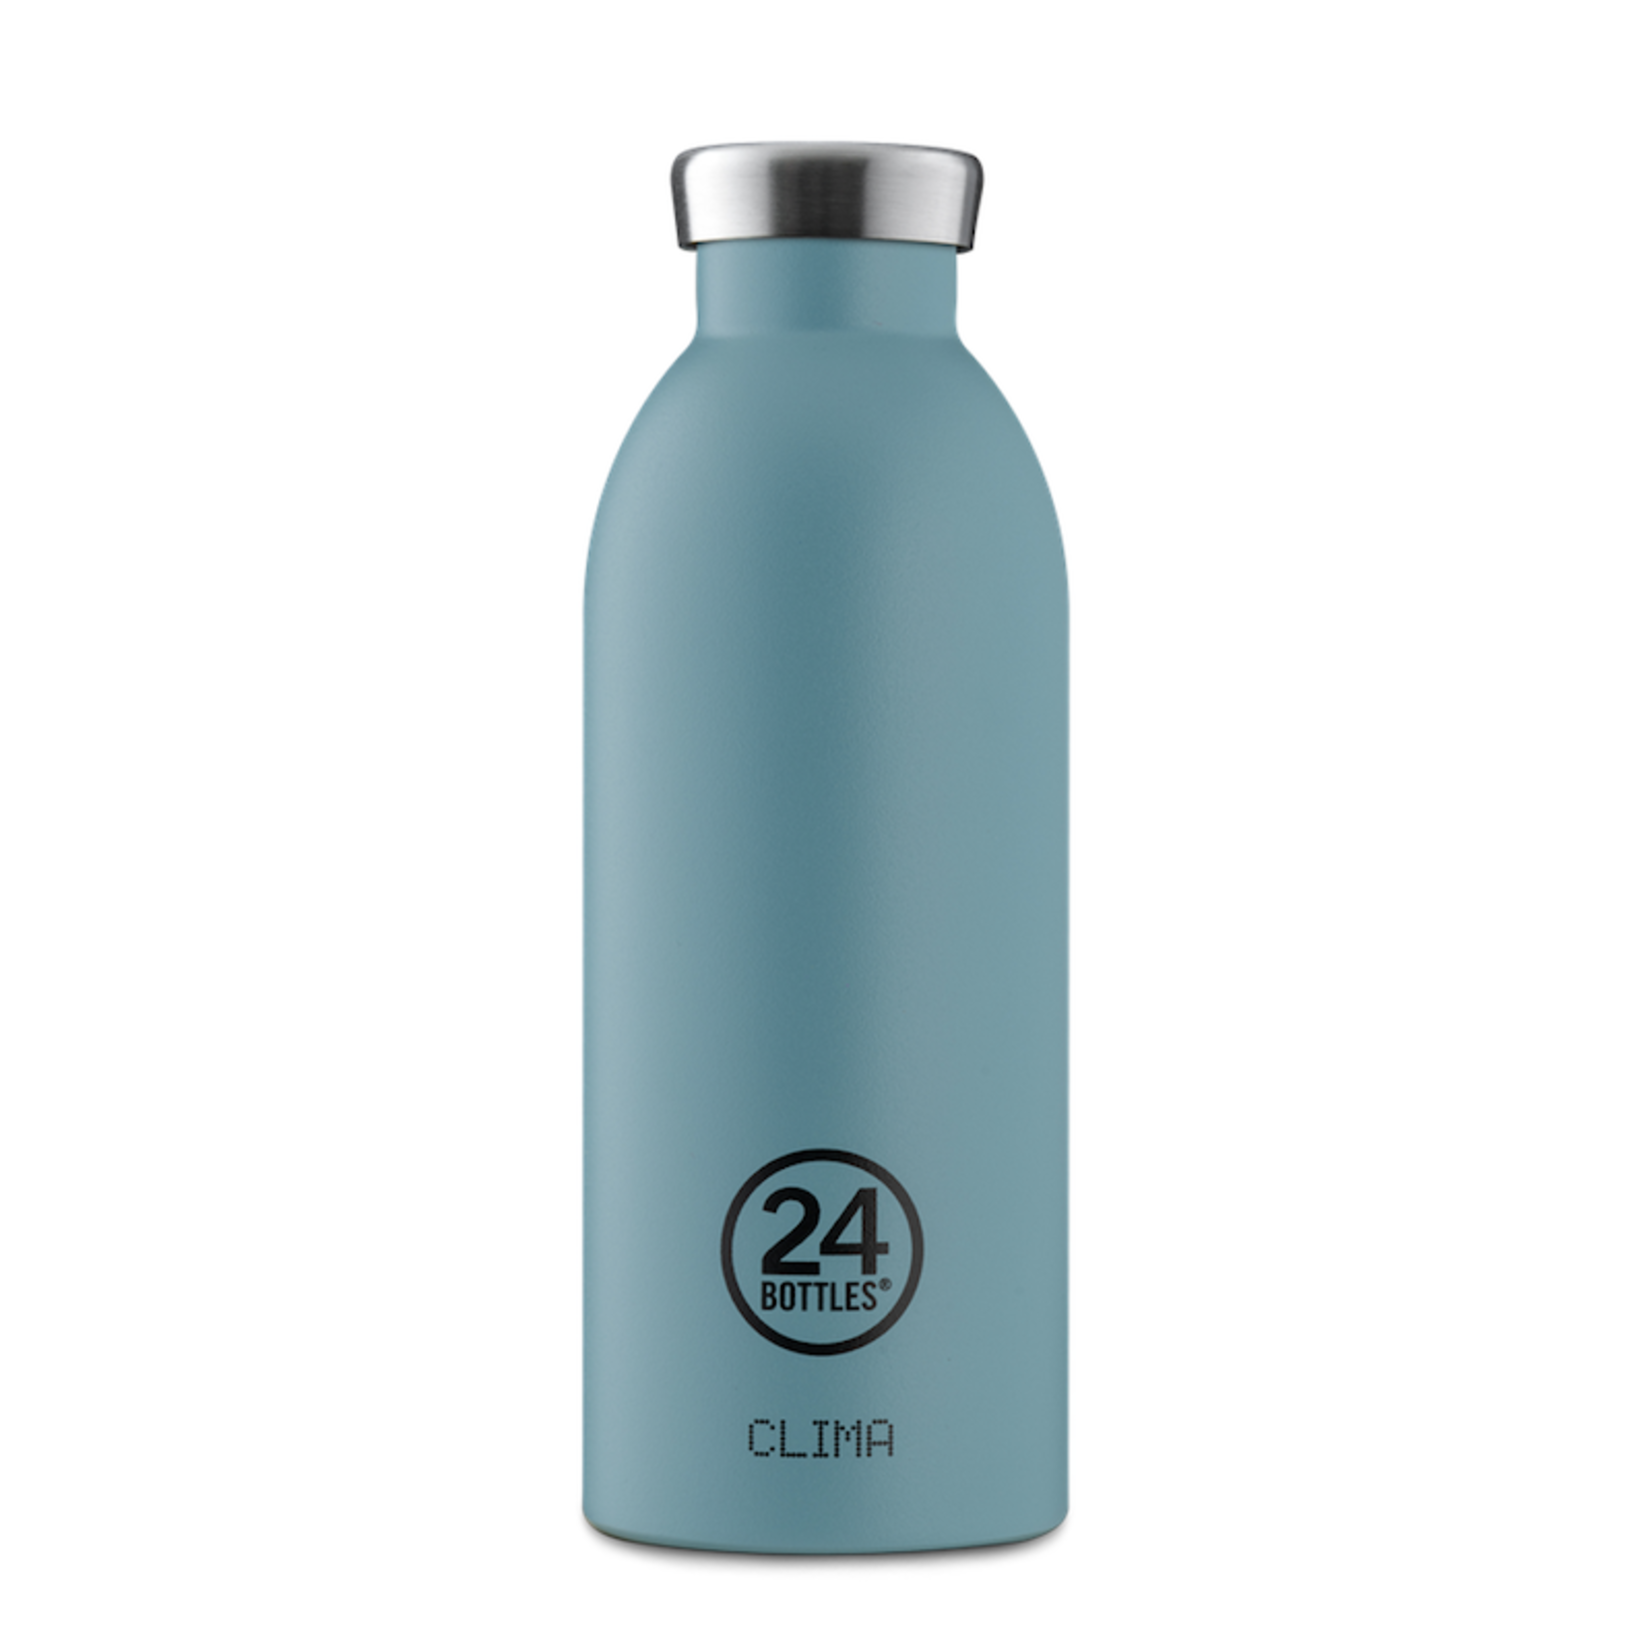 24 bottles 24 bottles - Clima bottle - powder blue